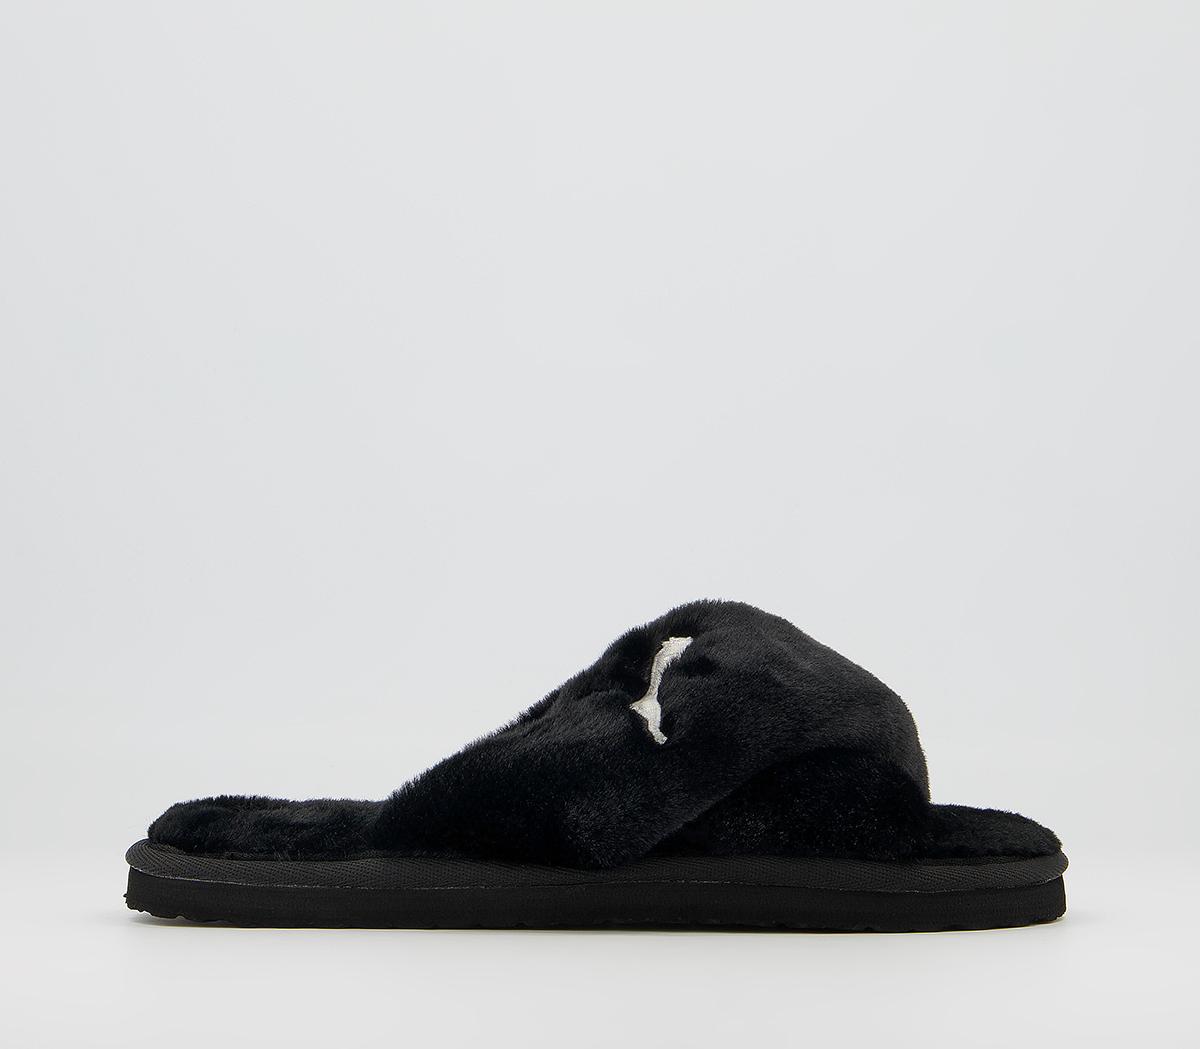 puma slippers black and white